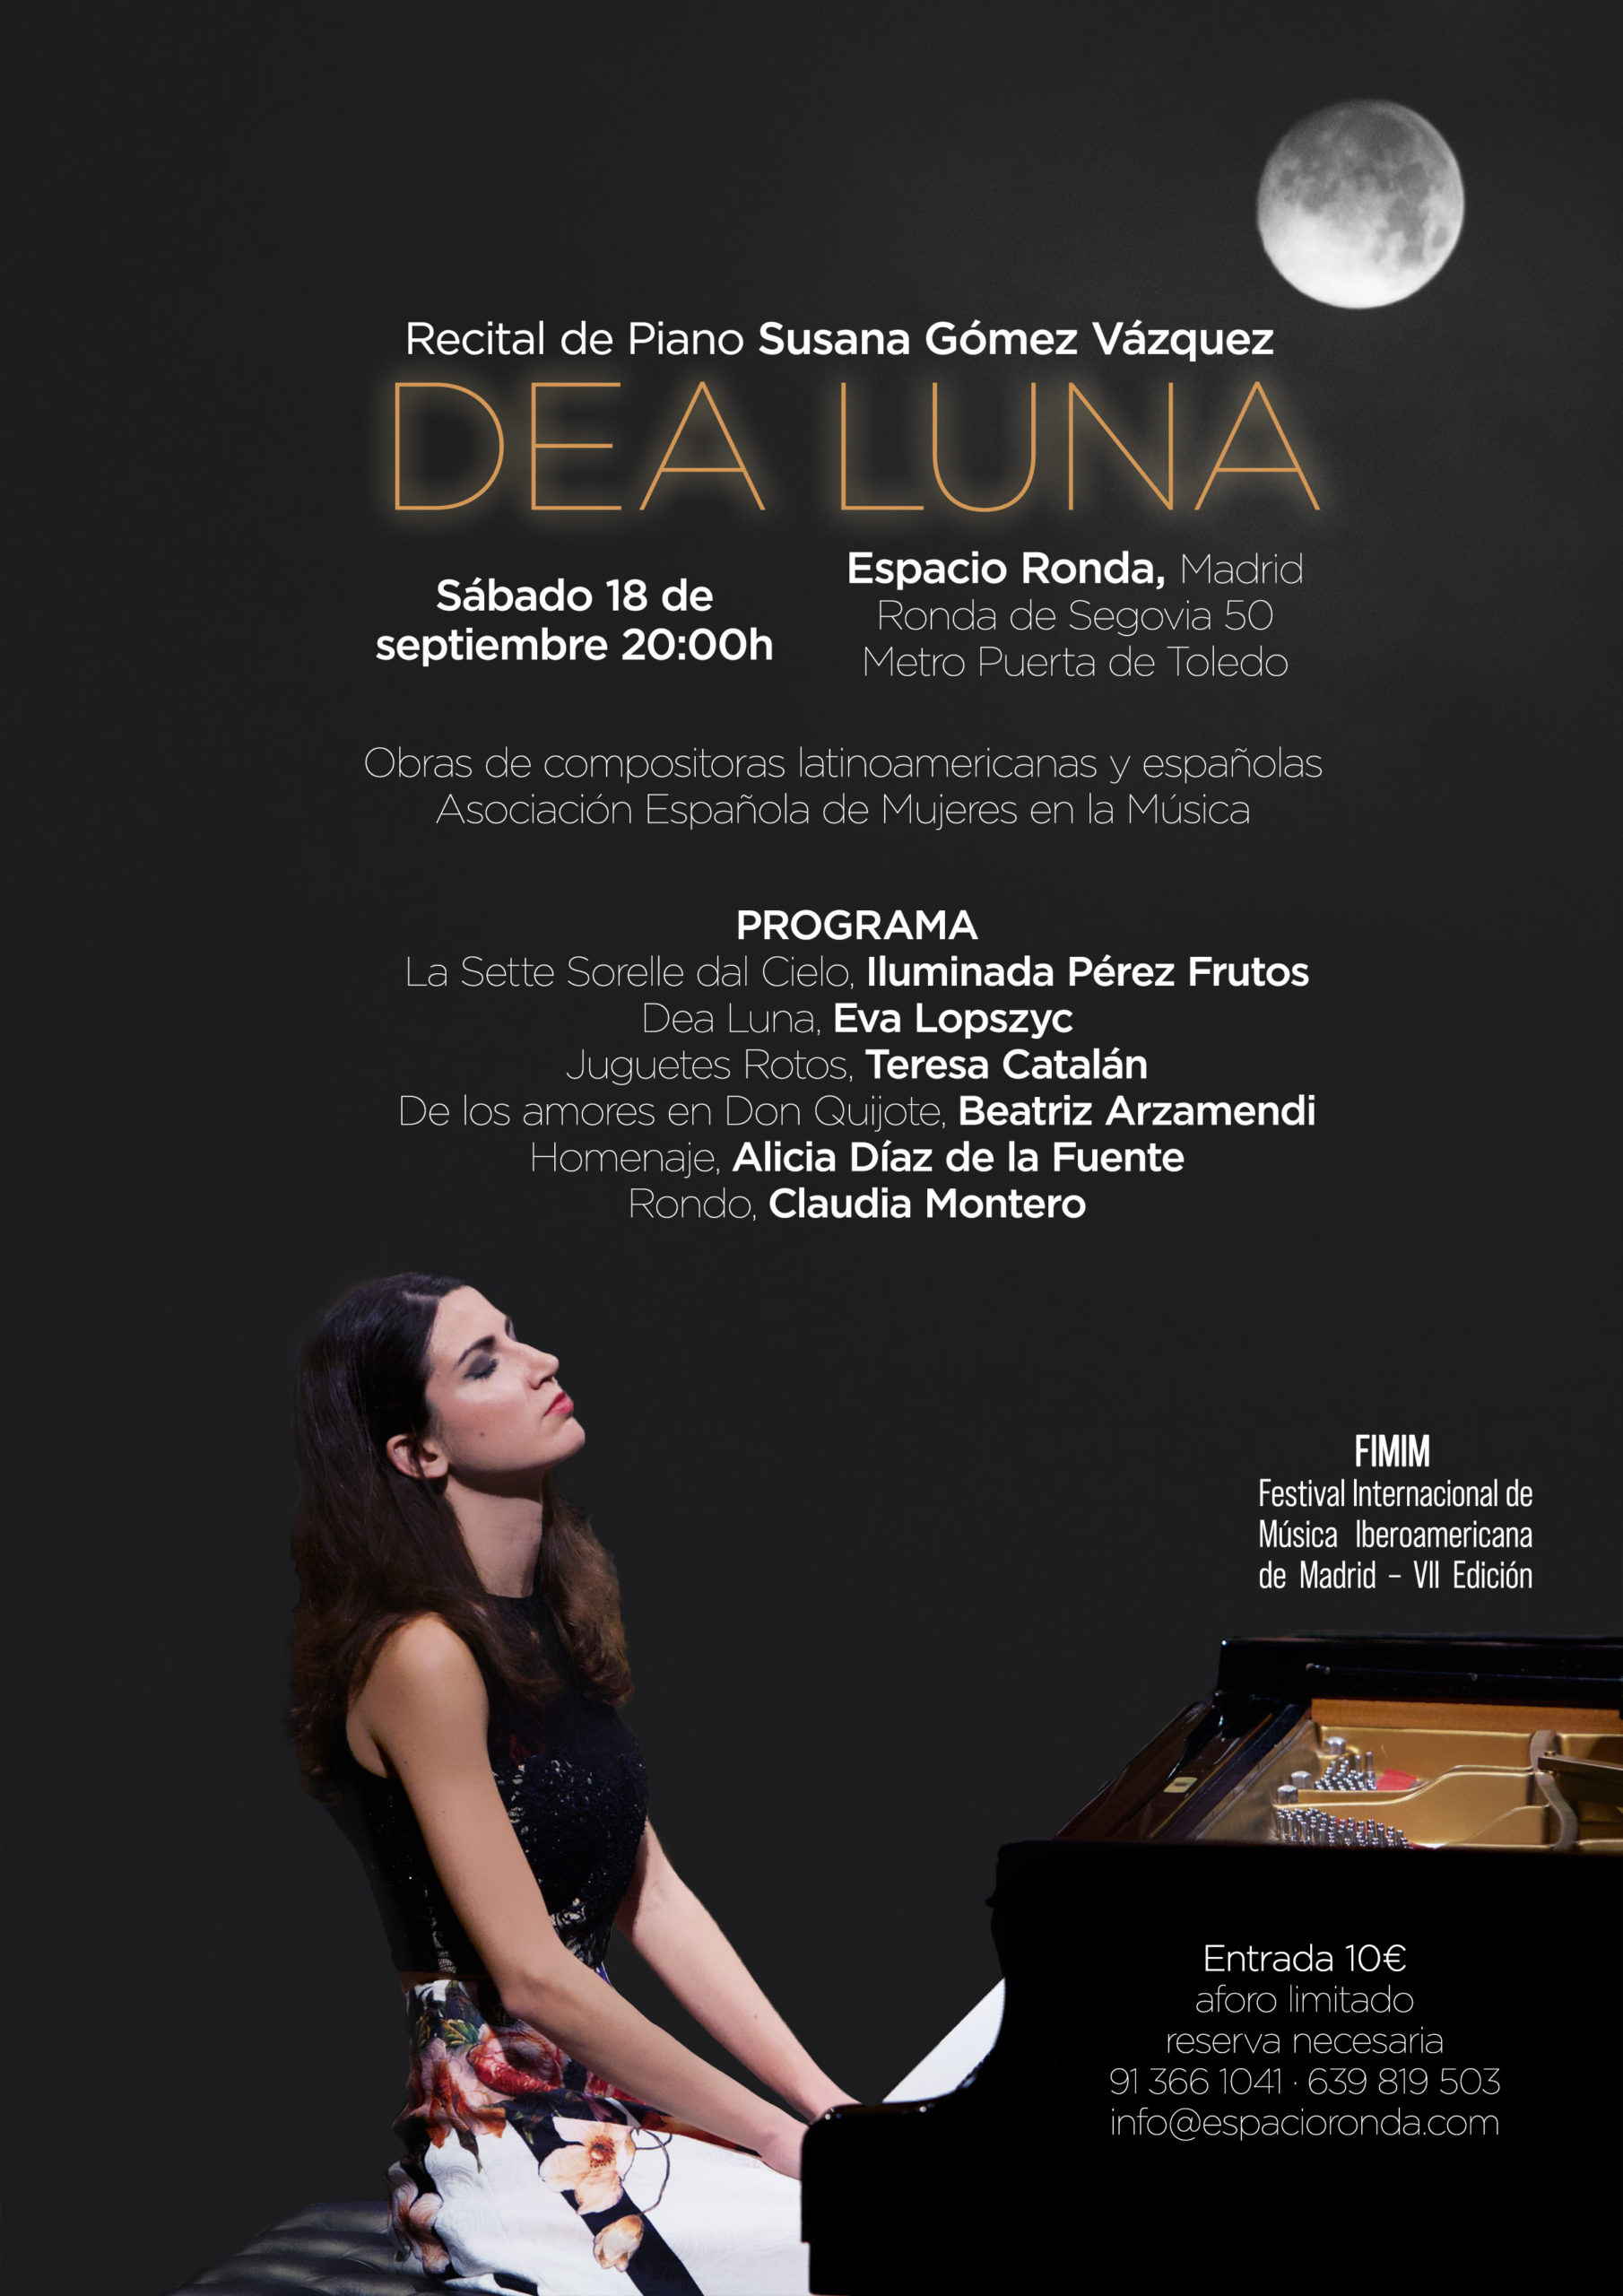 Respeto a ti mismo fe Polo Dea Luna. Recital de piano de Susana Gómez Vázquez | Mujeres en la Música